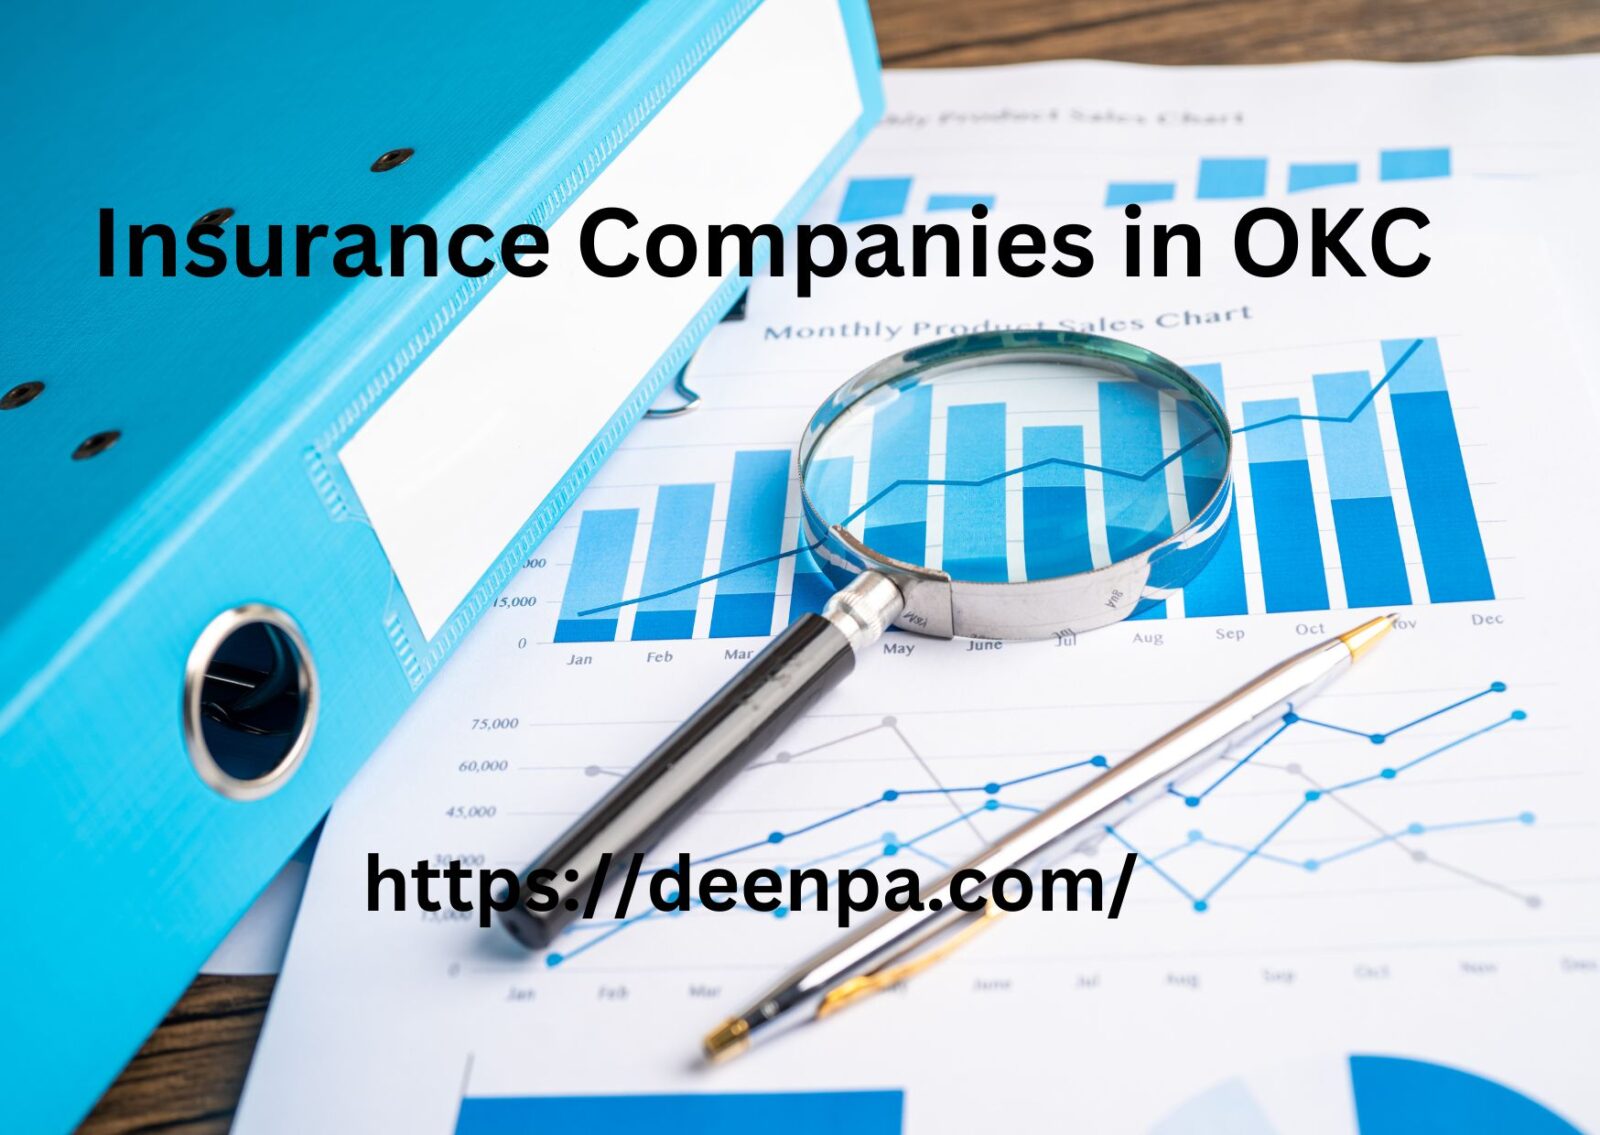 _Insurance Companies in OKC